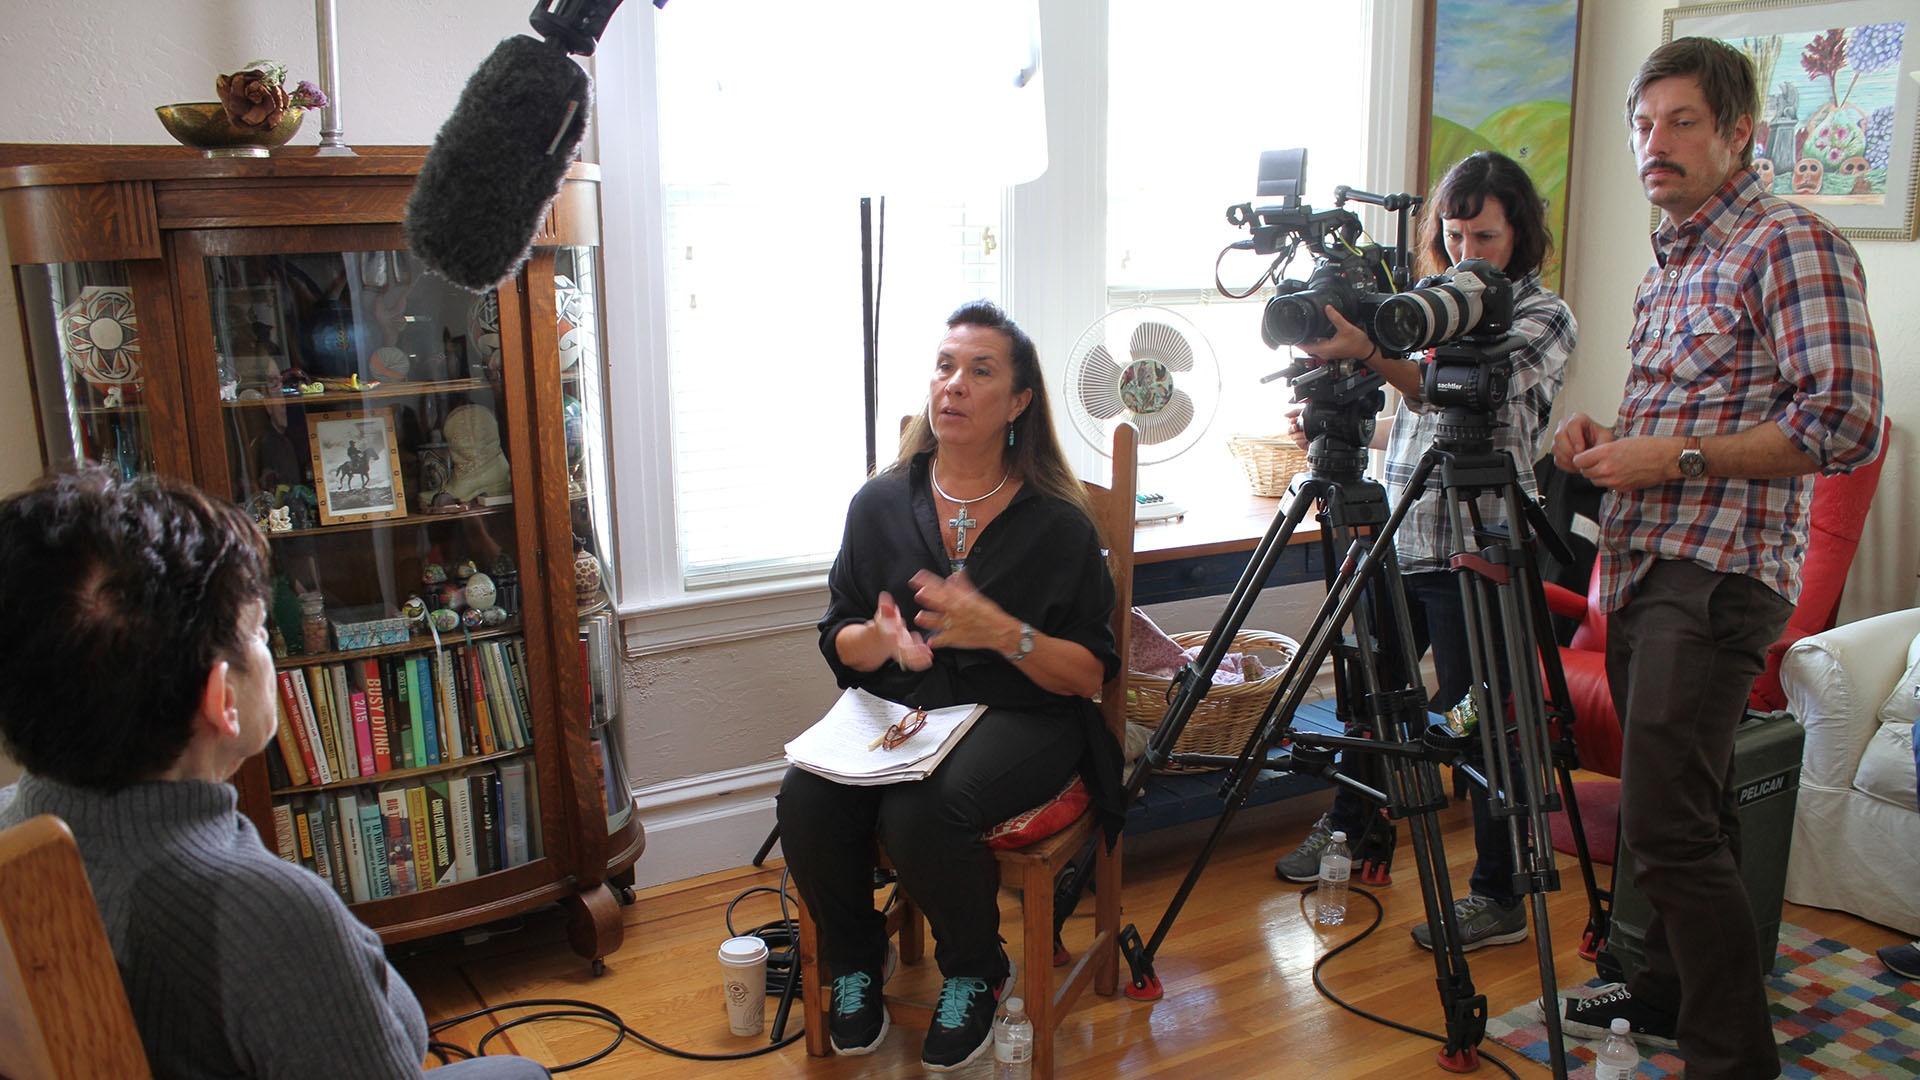 On location in San Francisco, the "Mankiller" documentary crew interviews Roxanne Dunbar Ortiz.